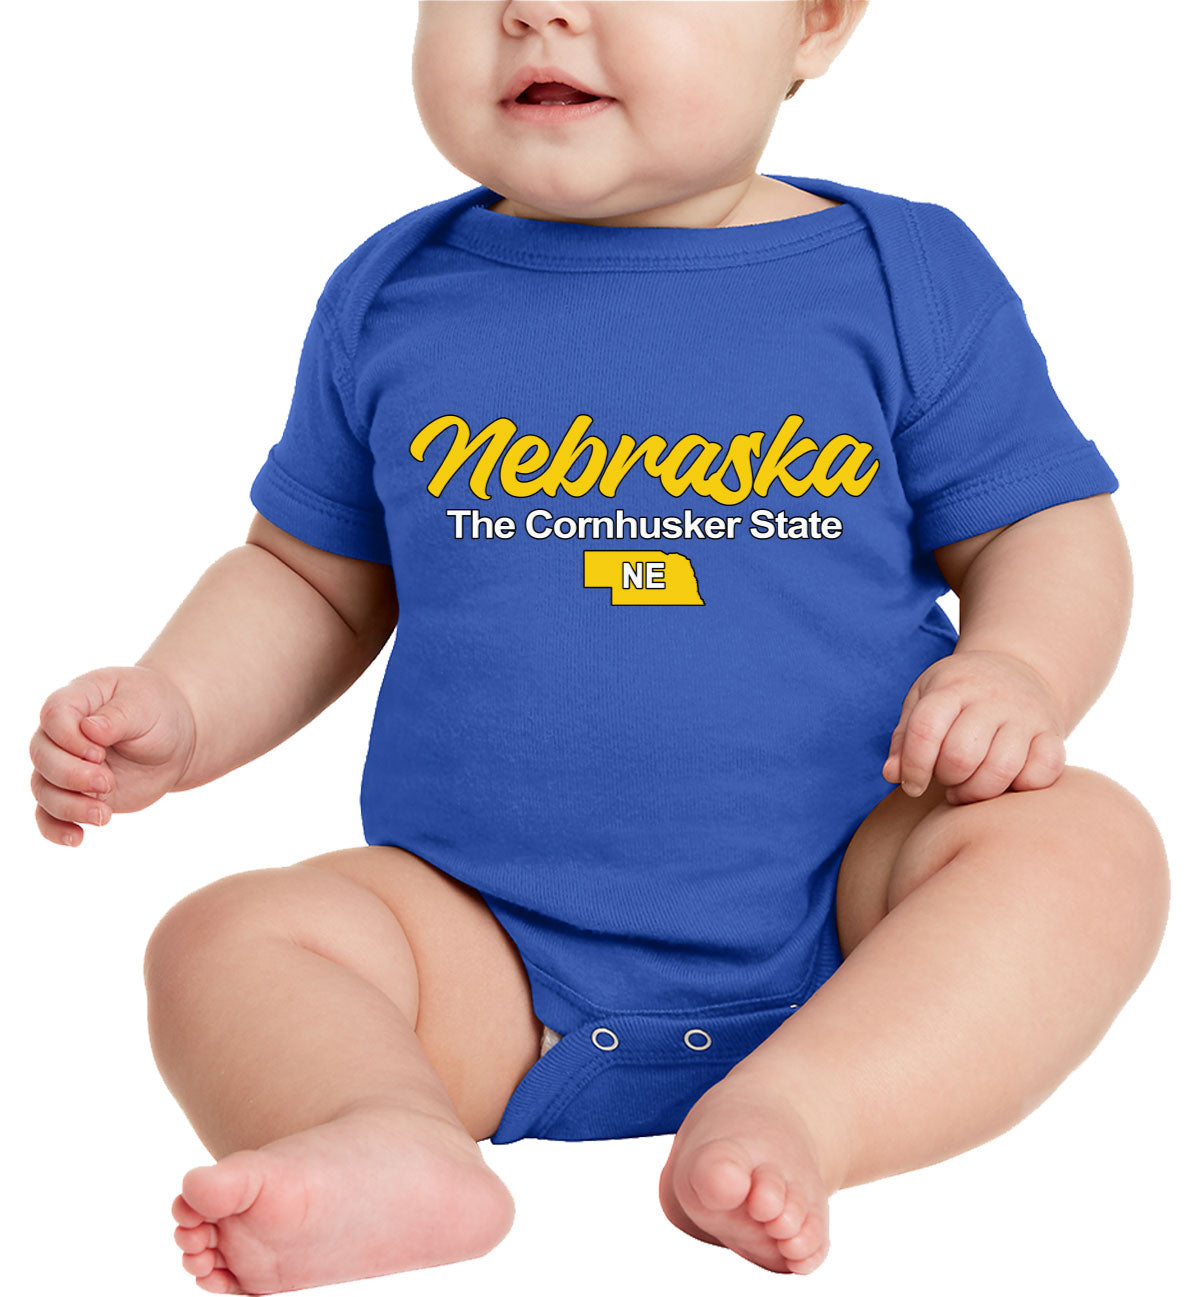 Nebraska The Cornhusker State Baby Onesie